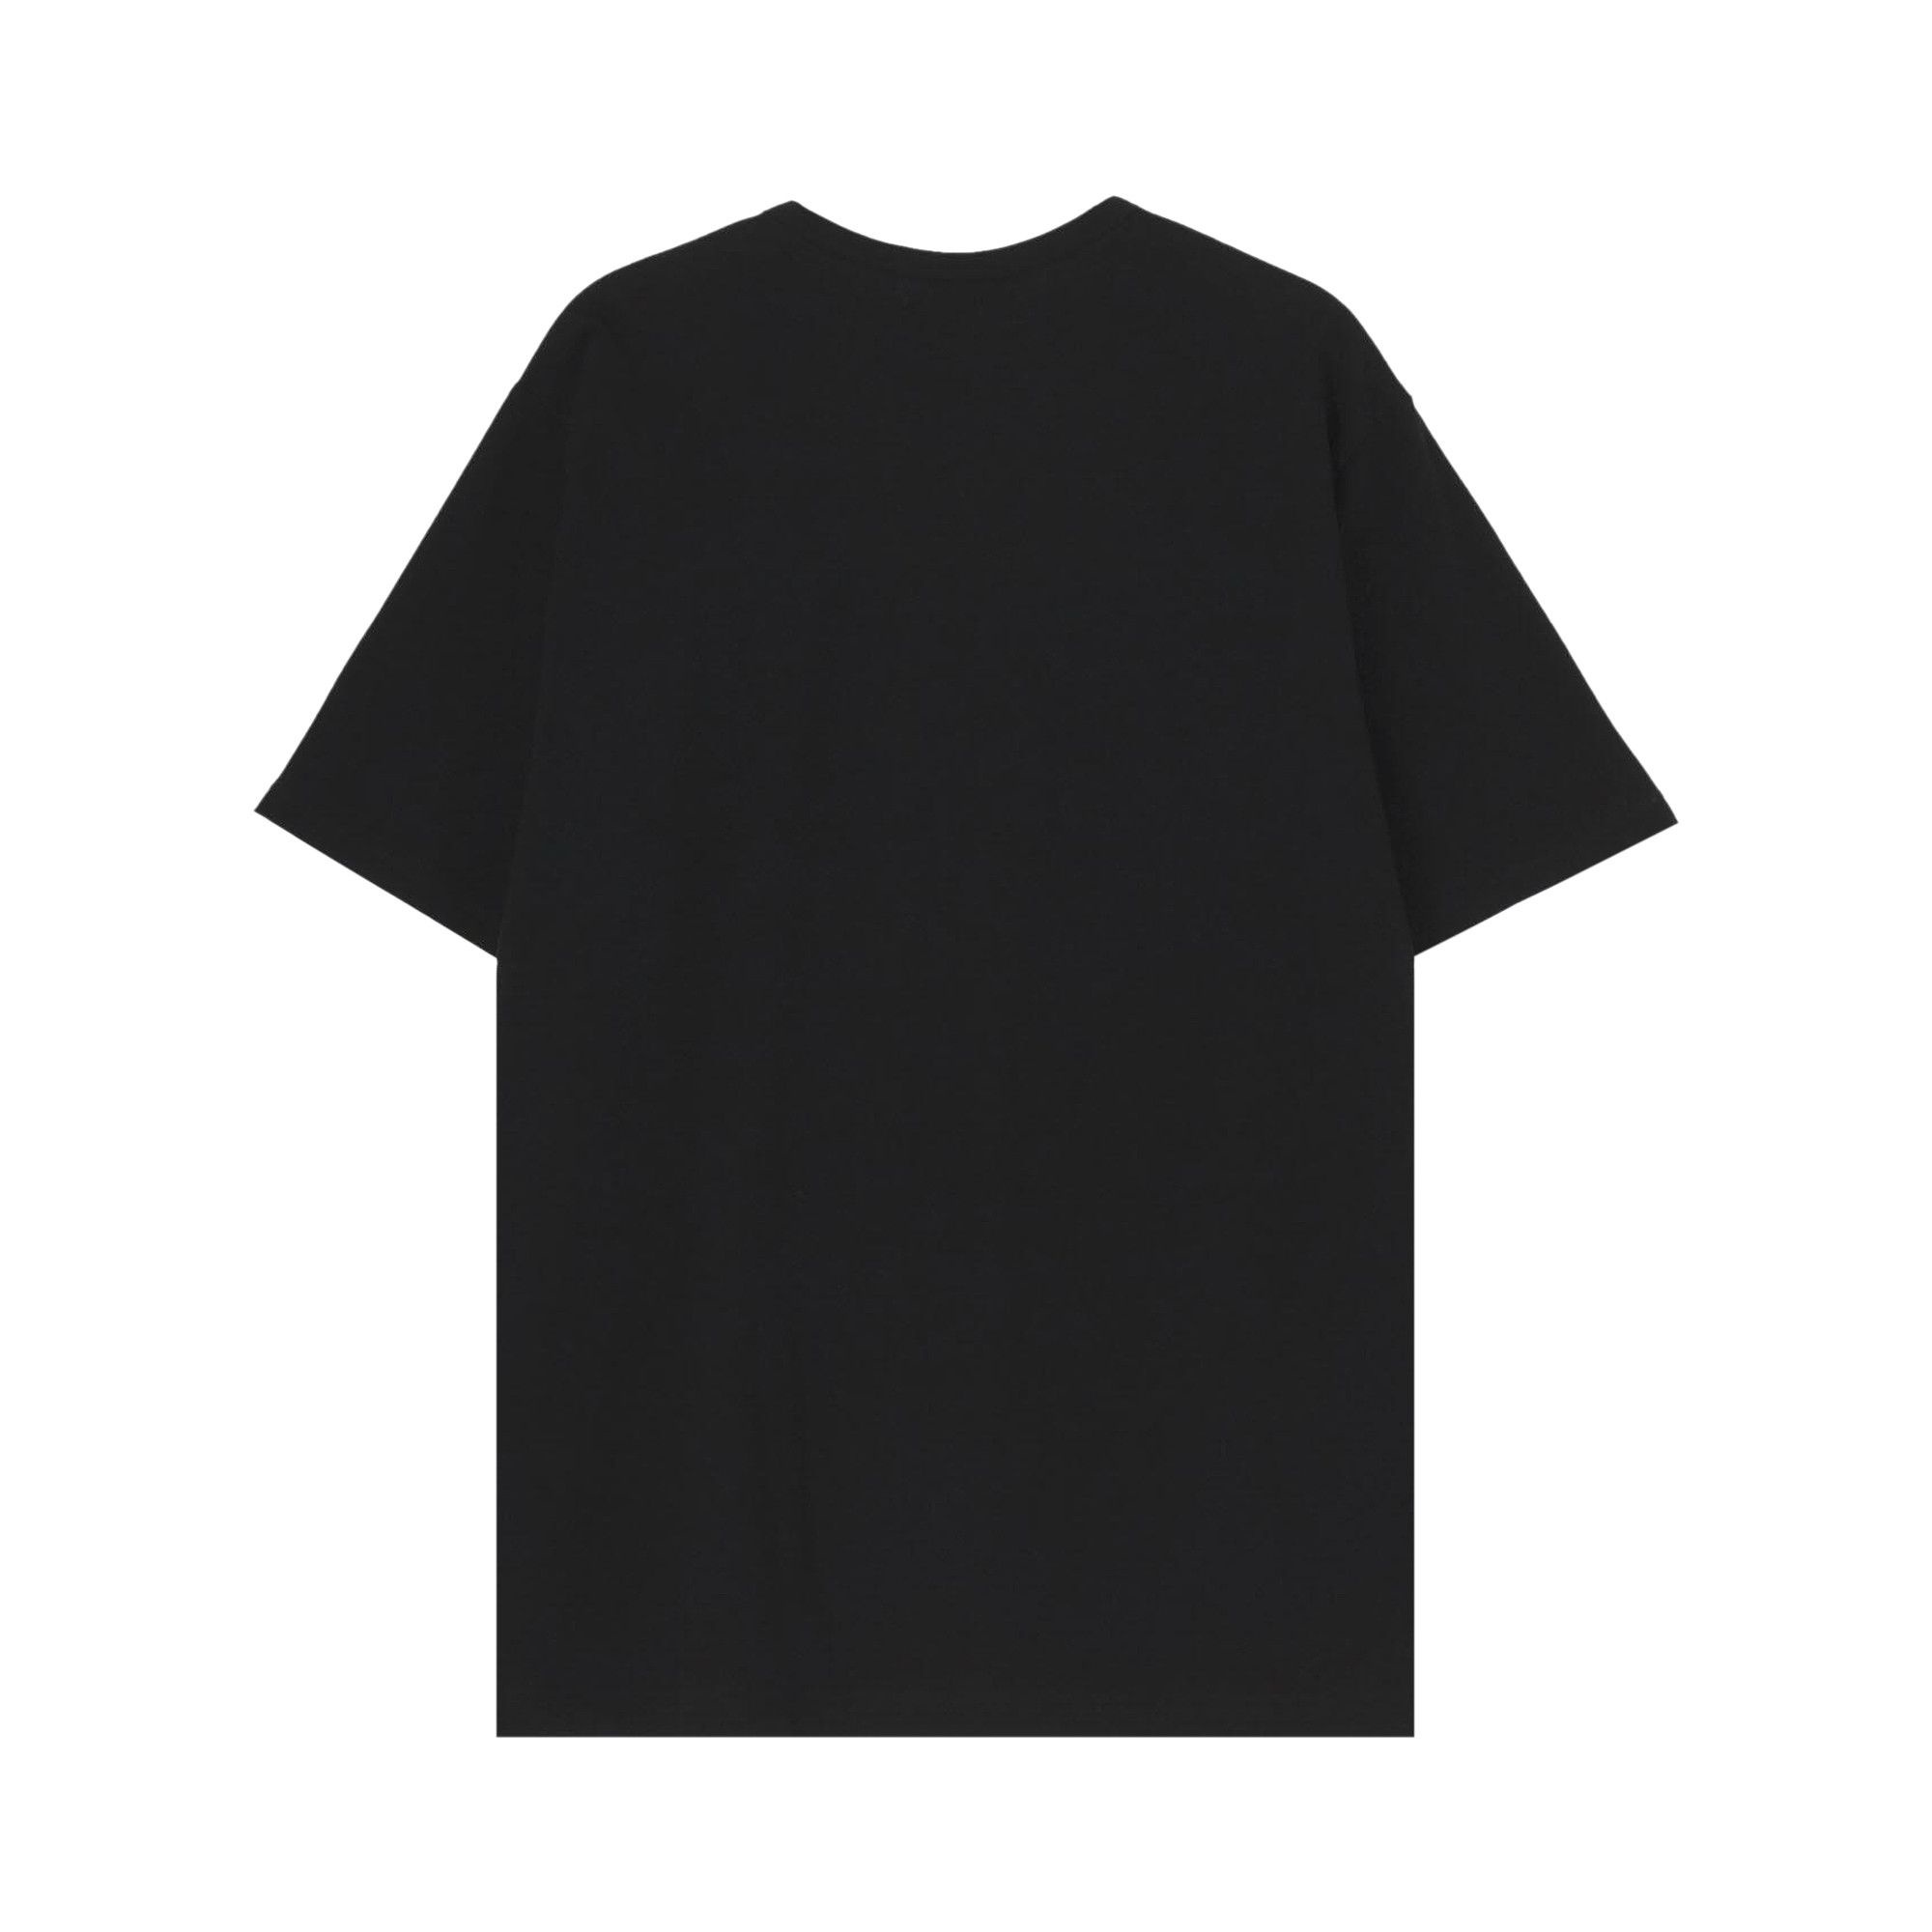 Yohji Yamamoto Short-Sleeve Printed T-Shirt 'Black' - 2